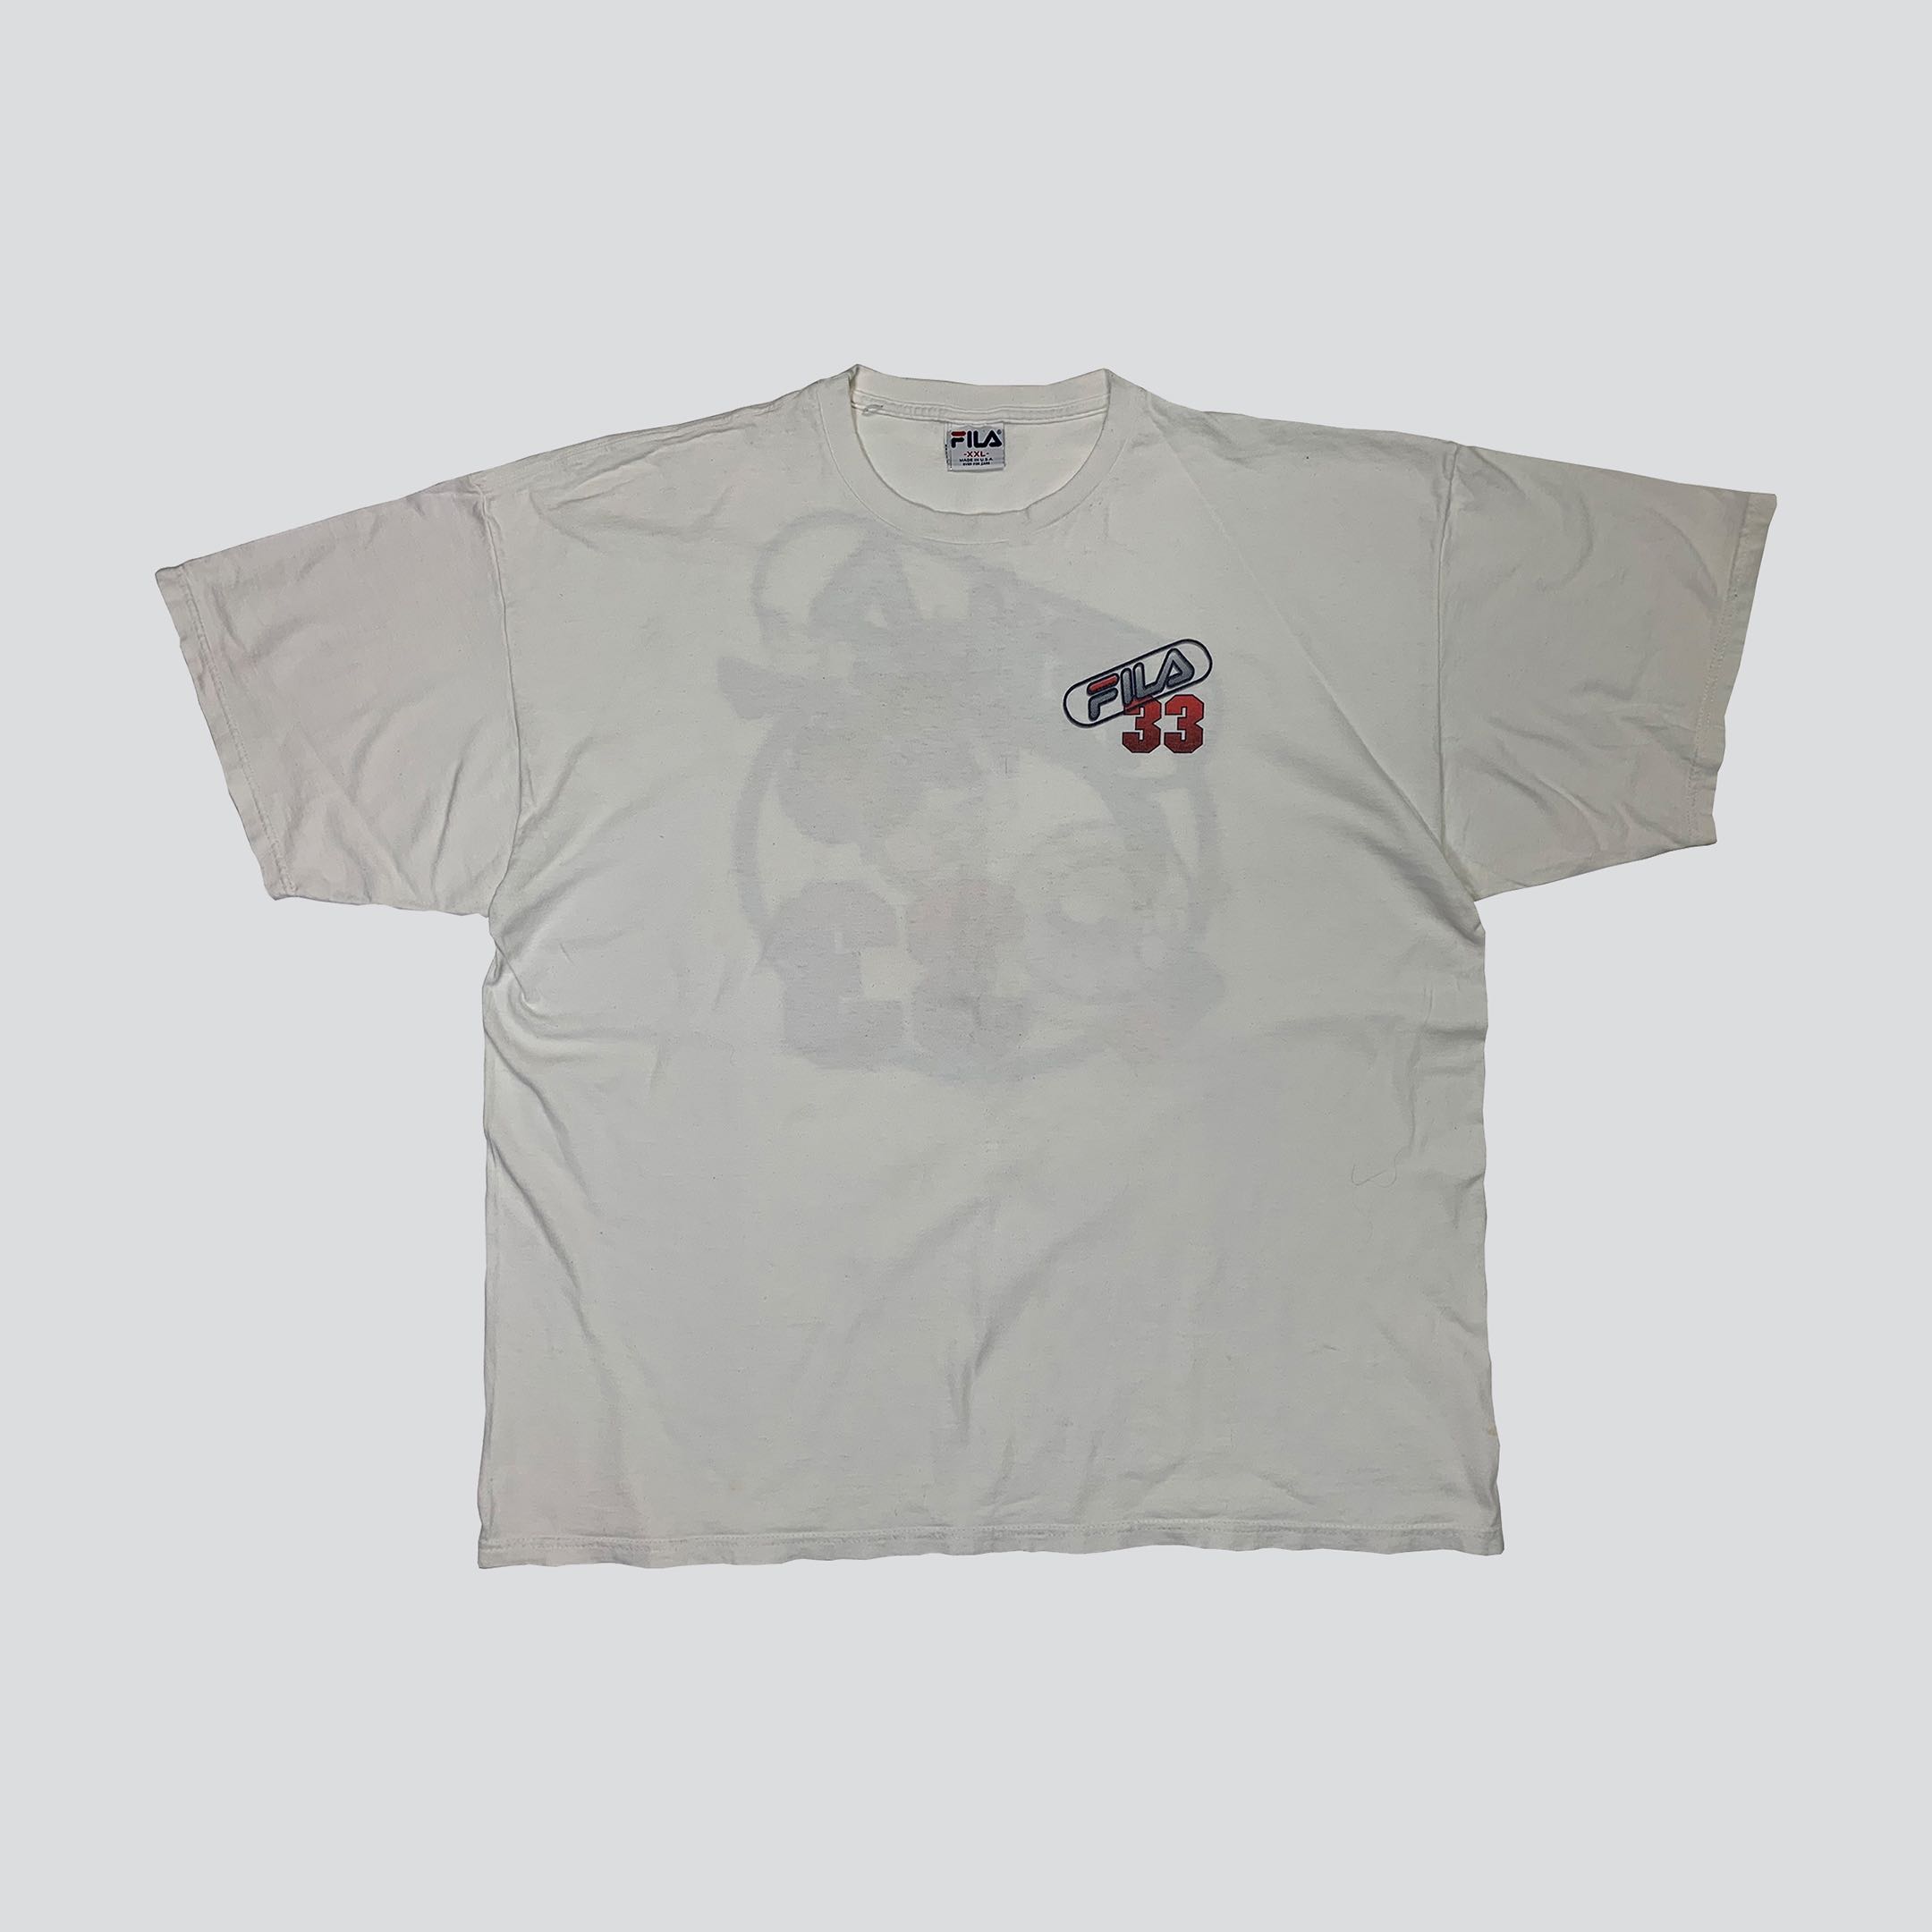 Vintage NBA T Shirt VTG Grant Hill Shirt Fila Grant Hill 33 Shirt Size 2XL Men Shirt XXL Women TShirt 90s Fila Shirt 1990s - 2